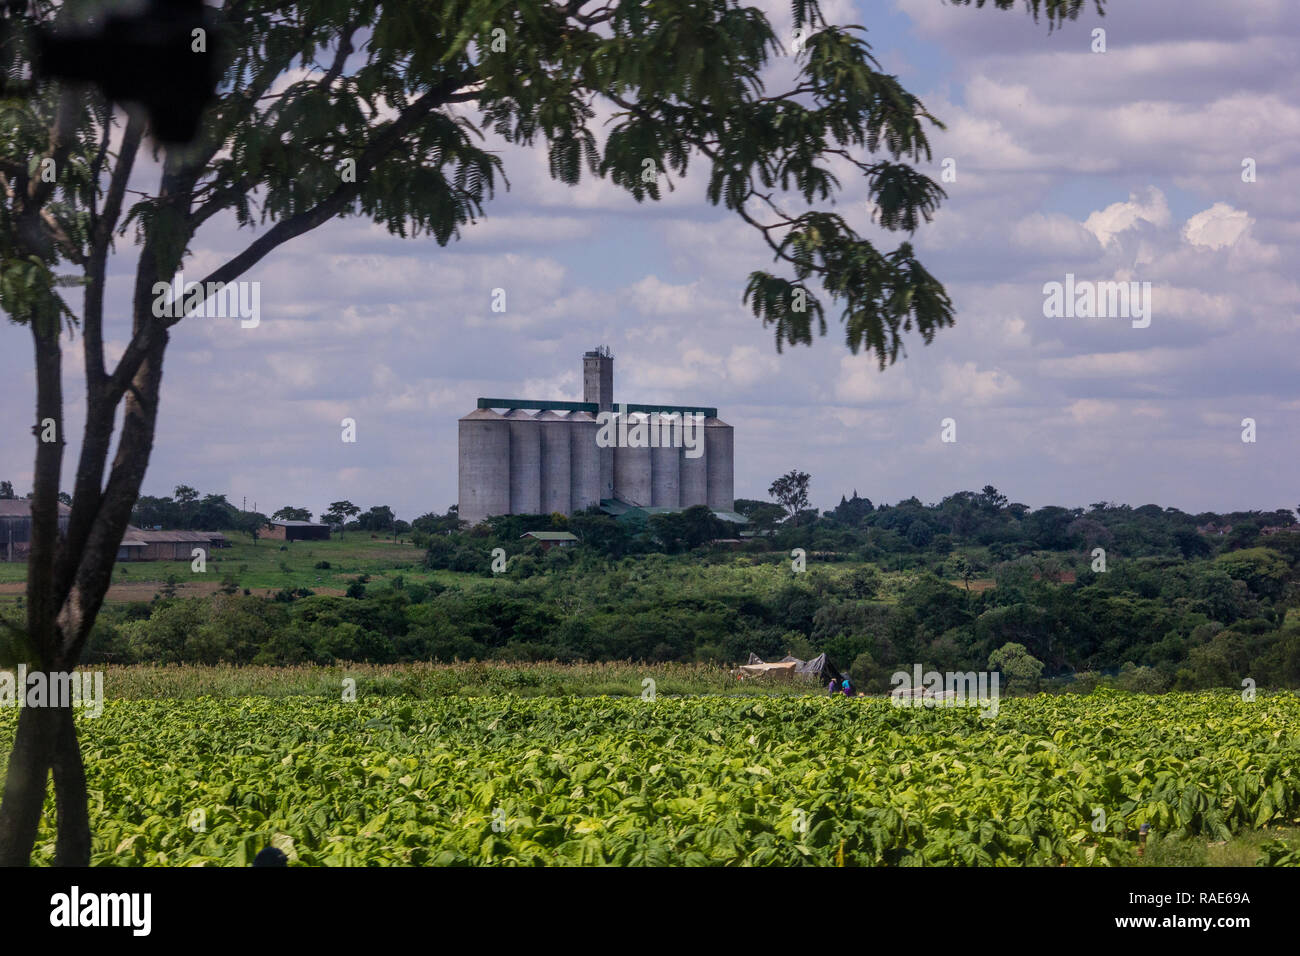 Tobacco farming in central Zimbabwe Stock Photo